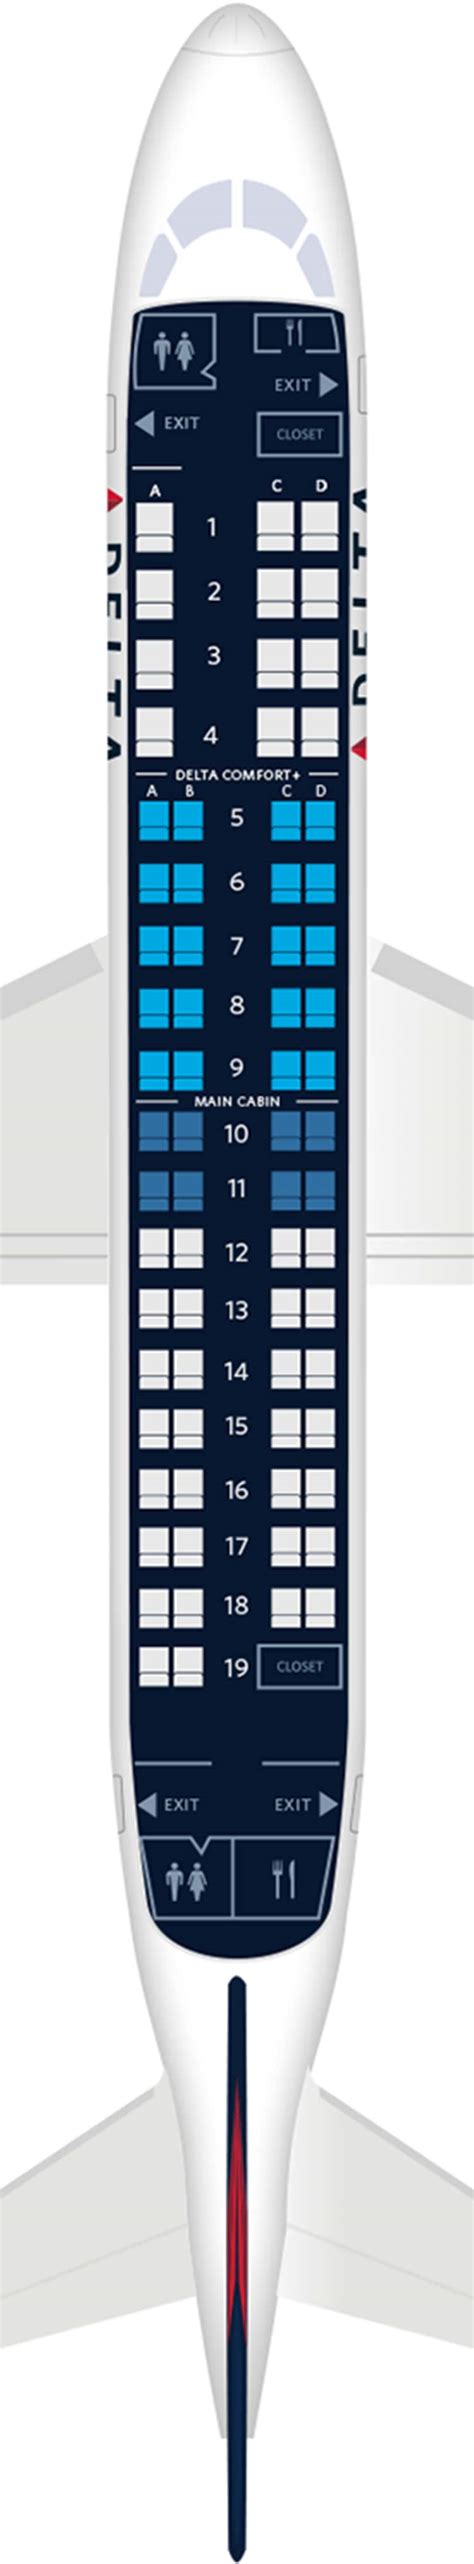 United Airlines Seating Chart Erj 175 | Brokeasshome.com